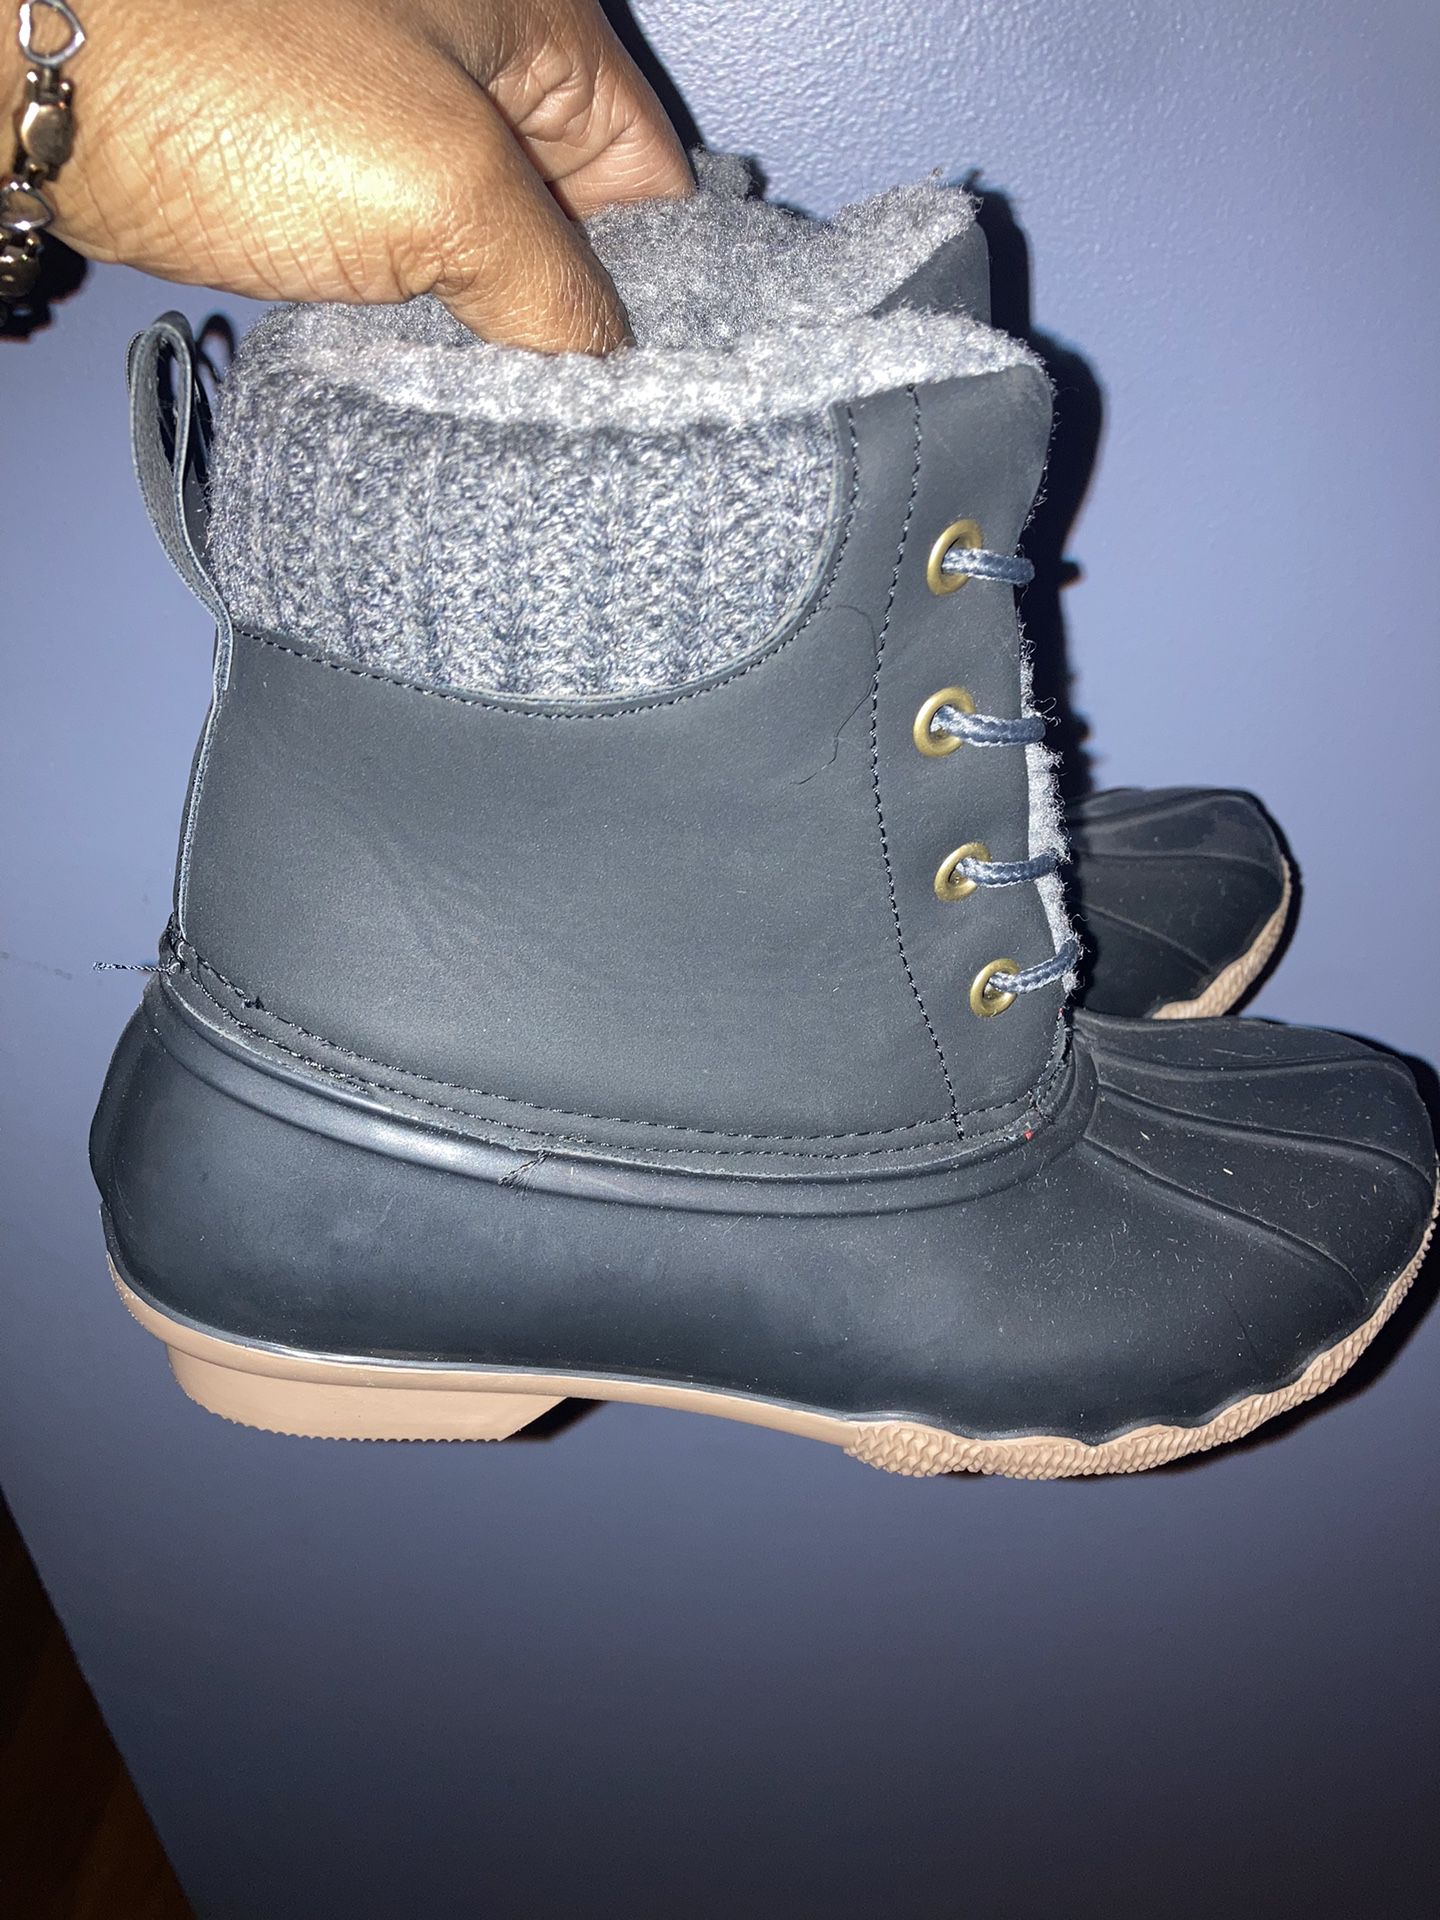 Girls/Kids Rain/Snow Boots Size 2